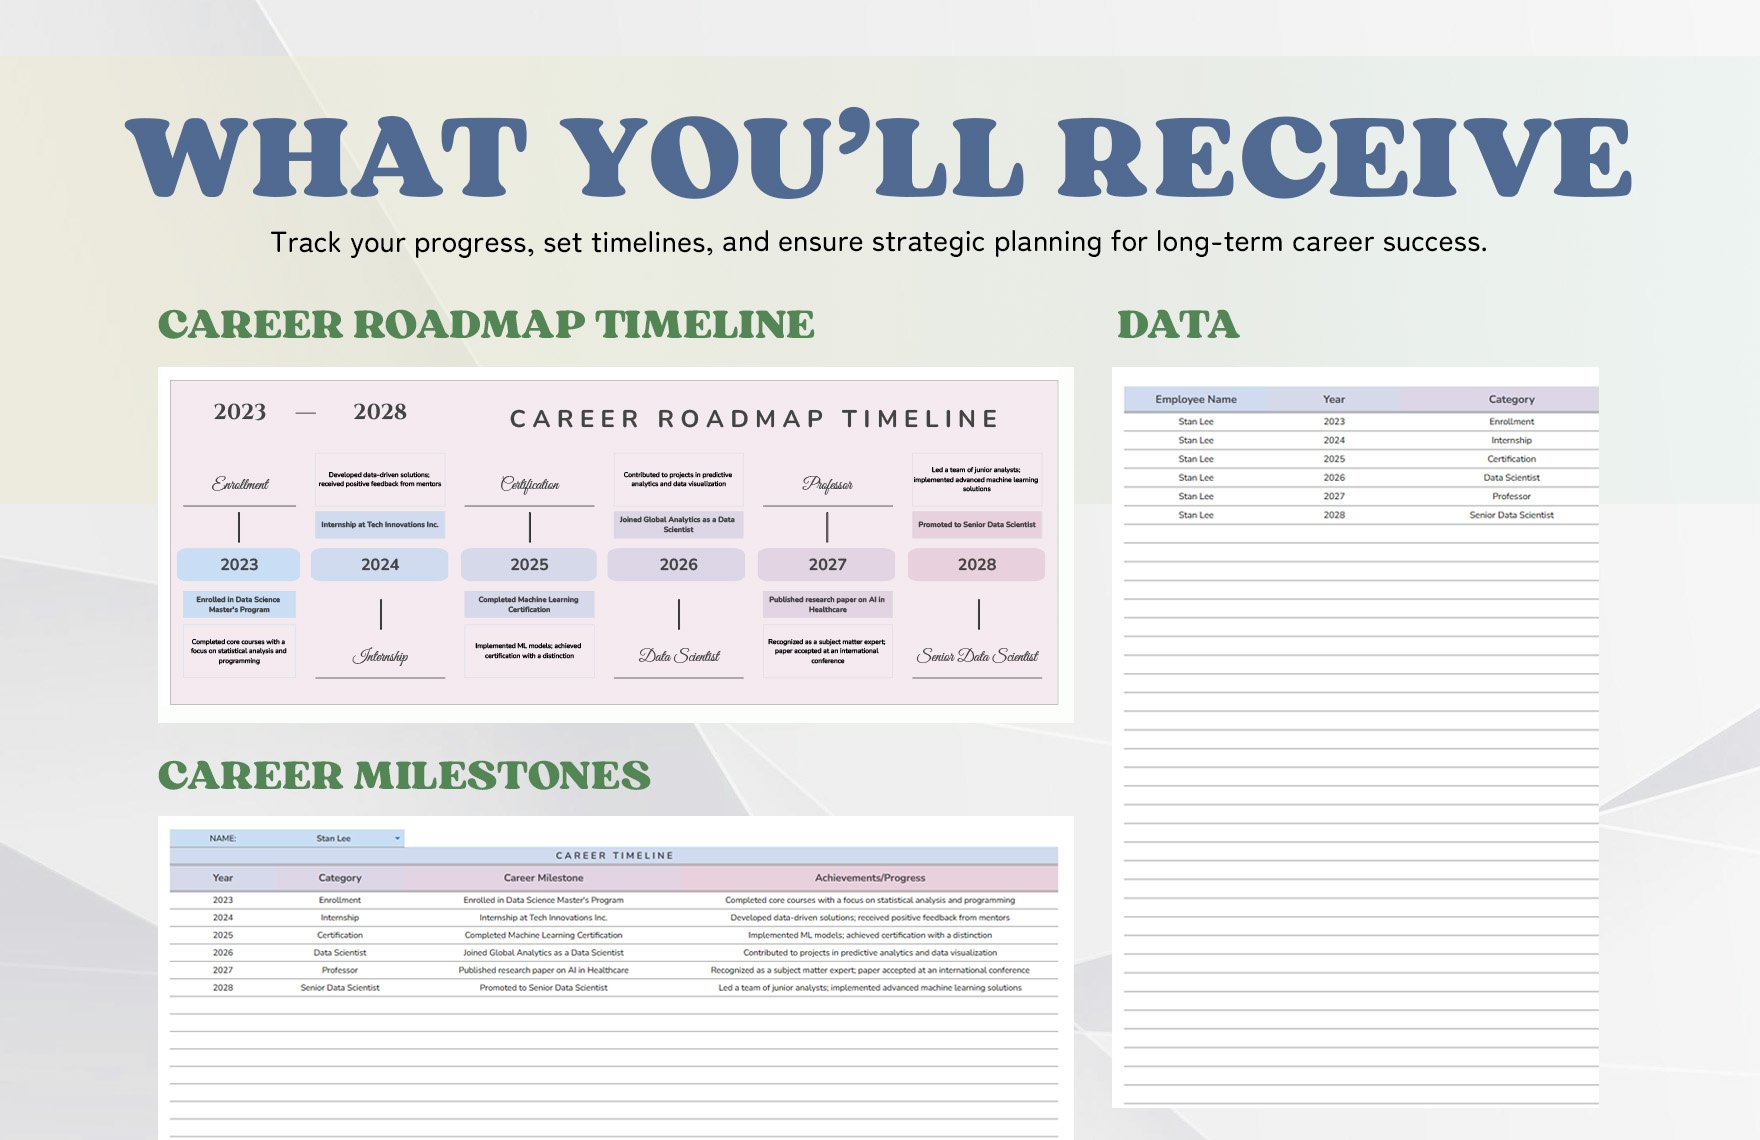 Career Roadmap Timeline Template